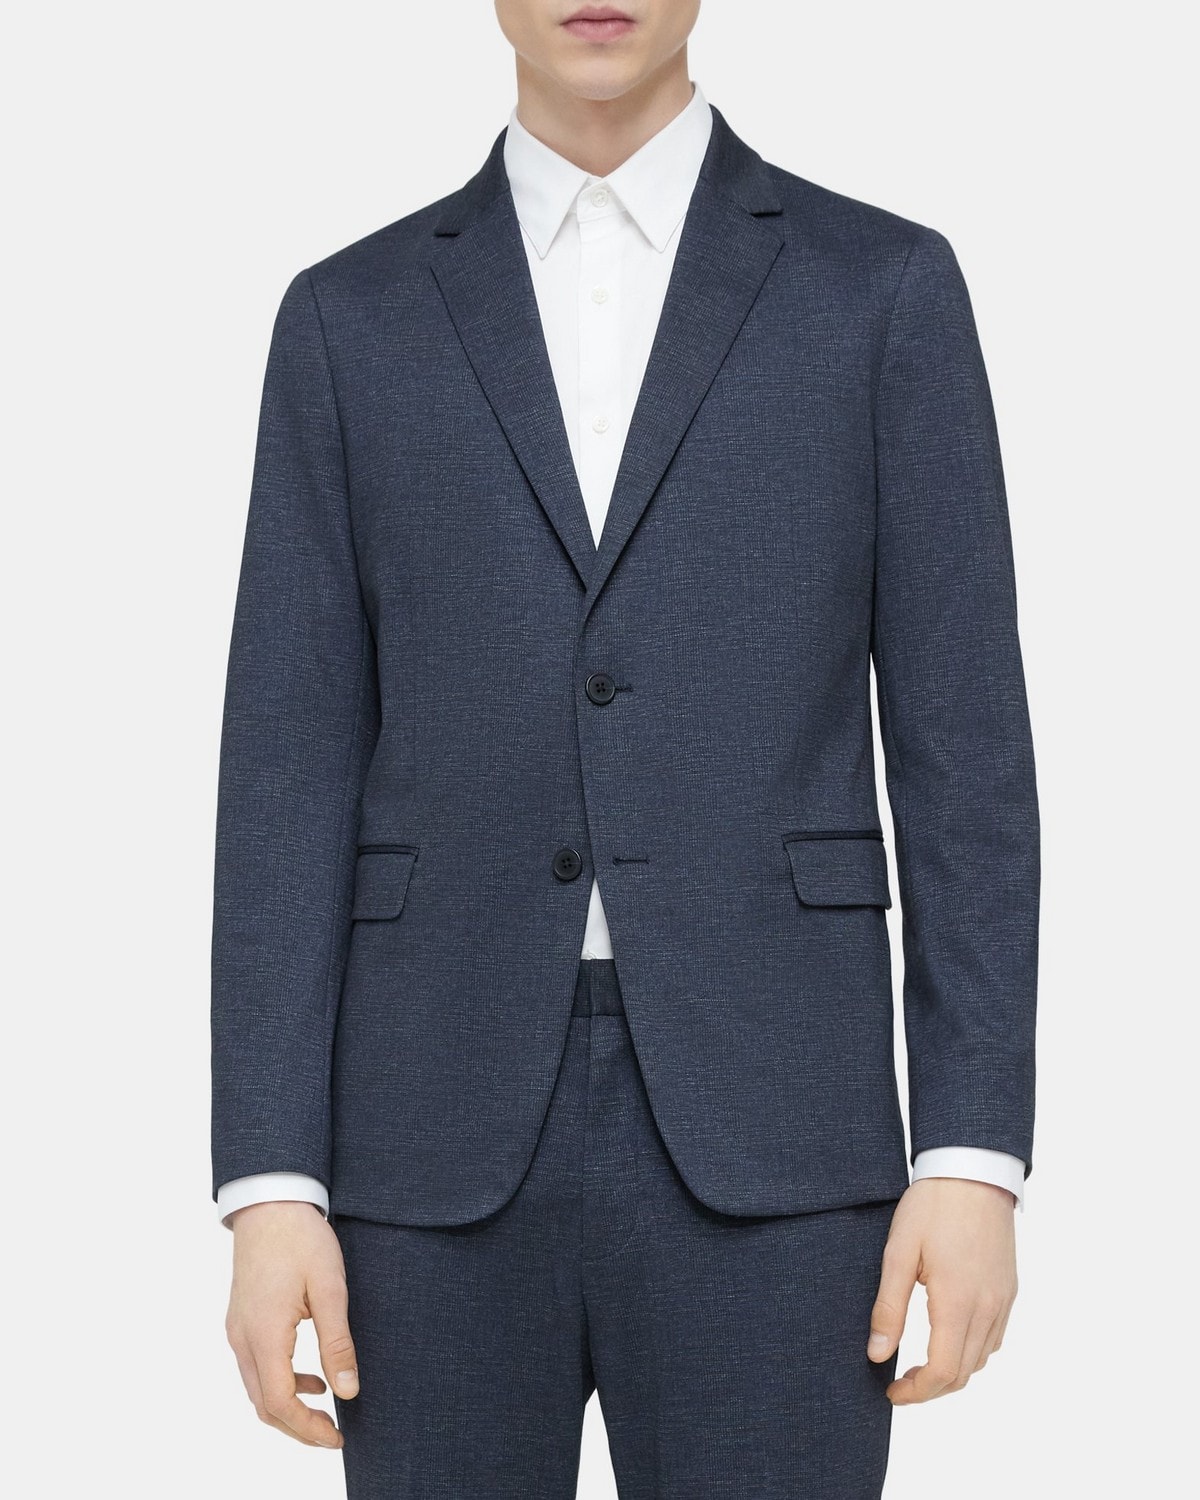 Unstructured Suit Jacket in Plaid Knit